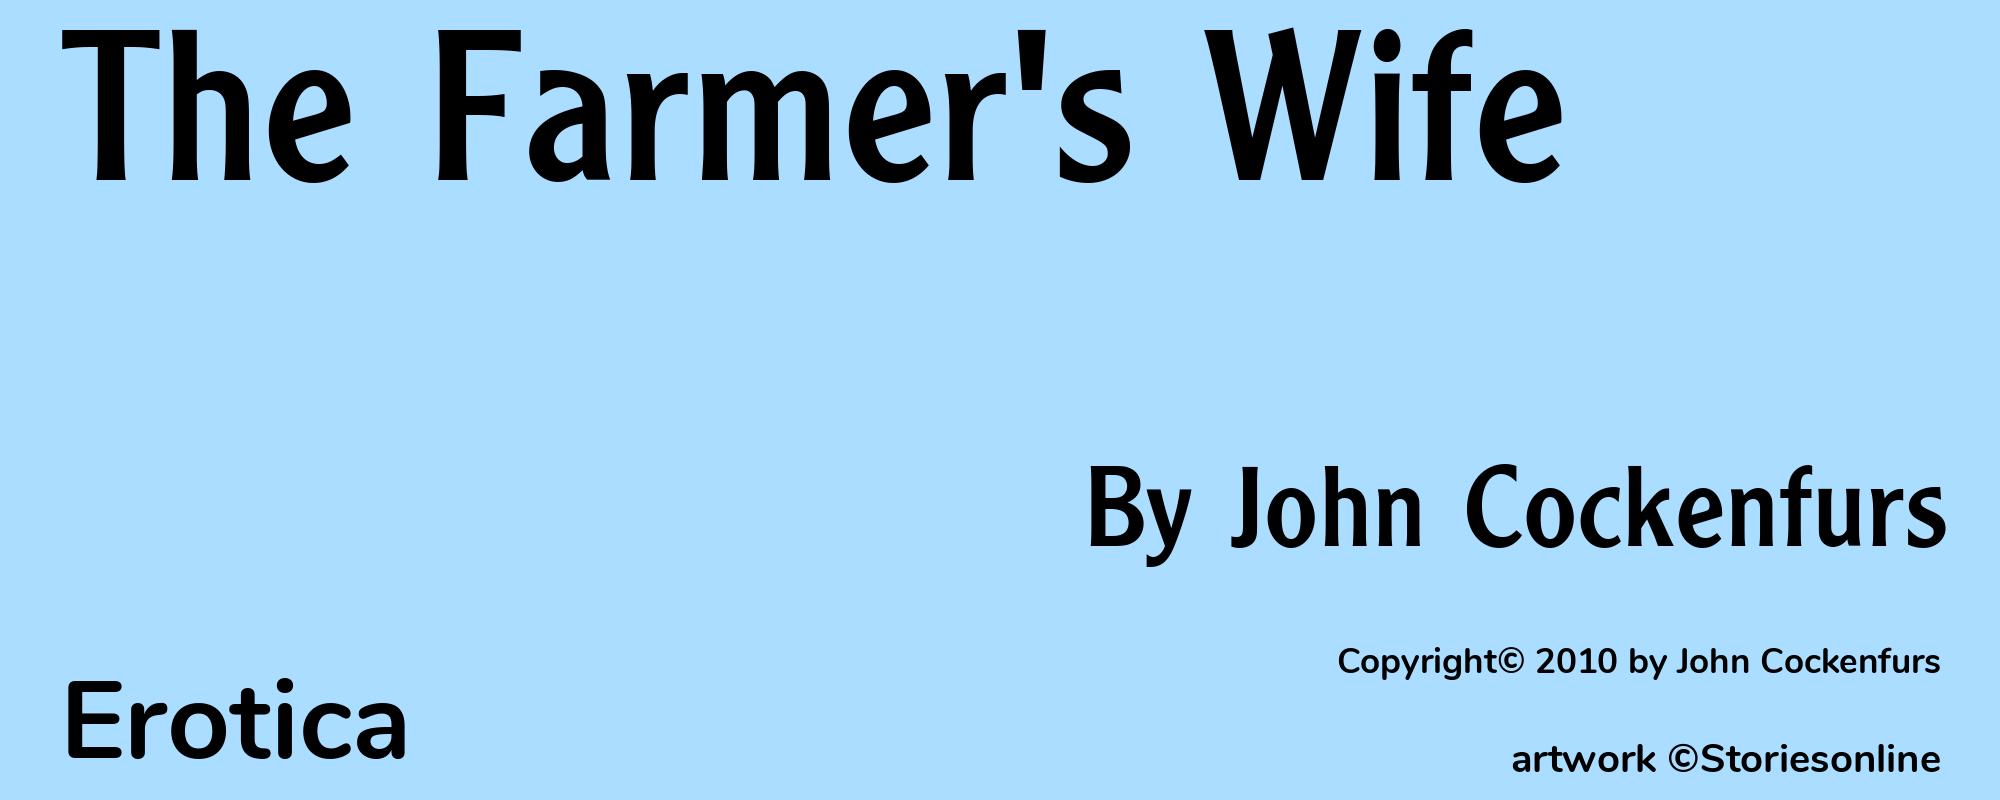 The Farmer's Wife - Cover